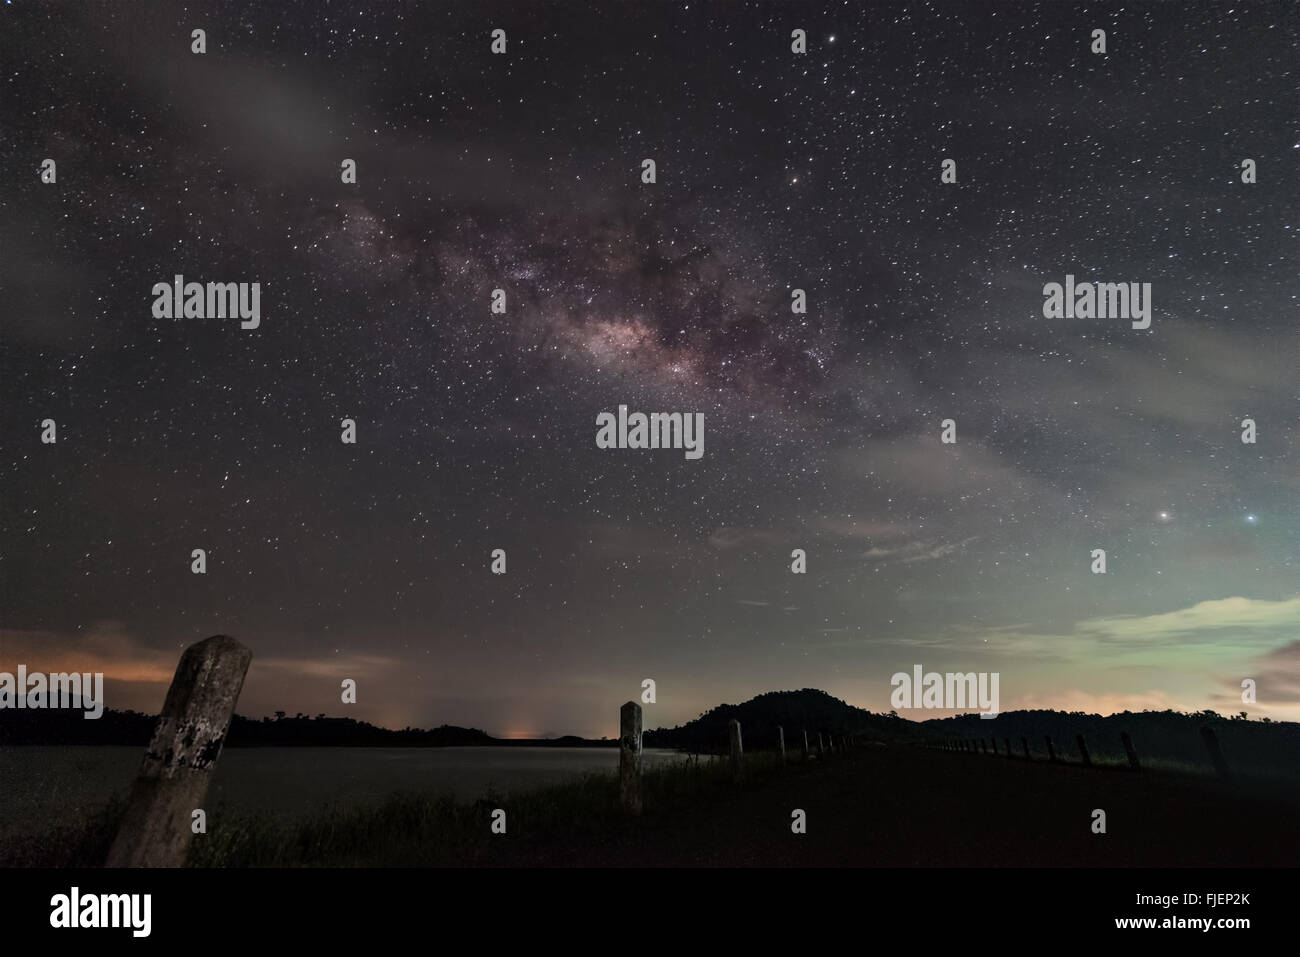 Milky Way Galaxy, Night Sky with on dam Stock Photo